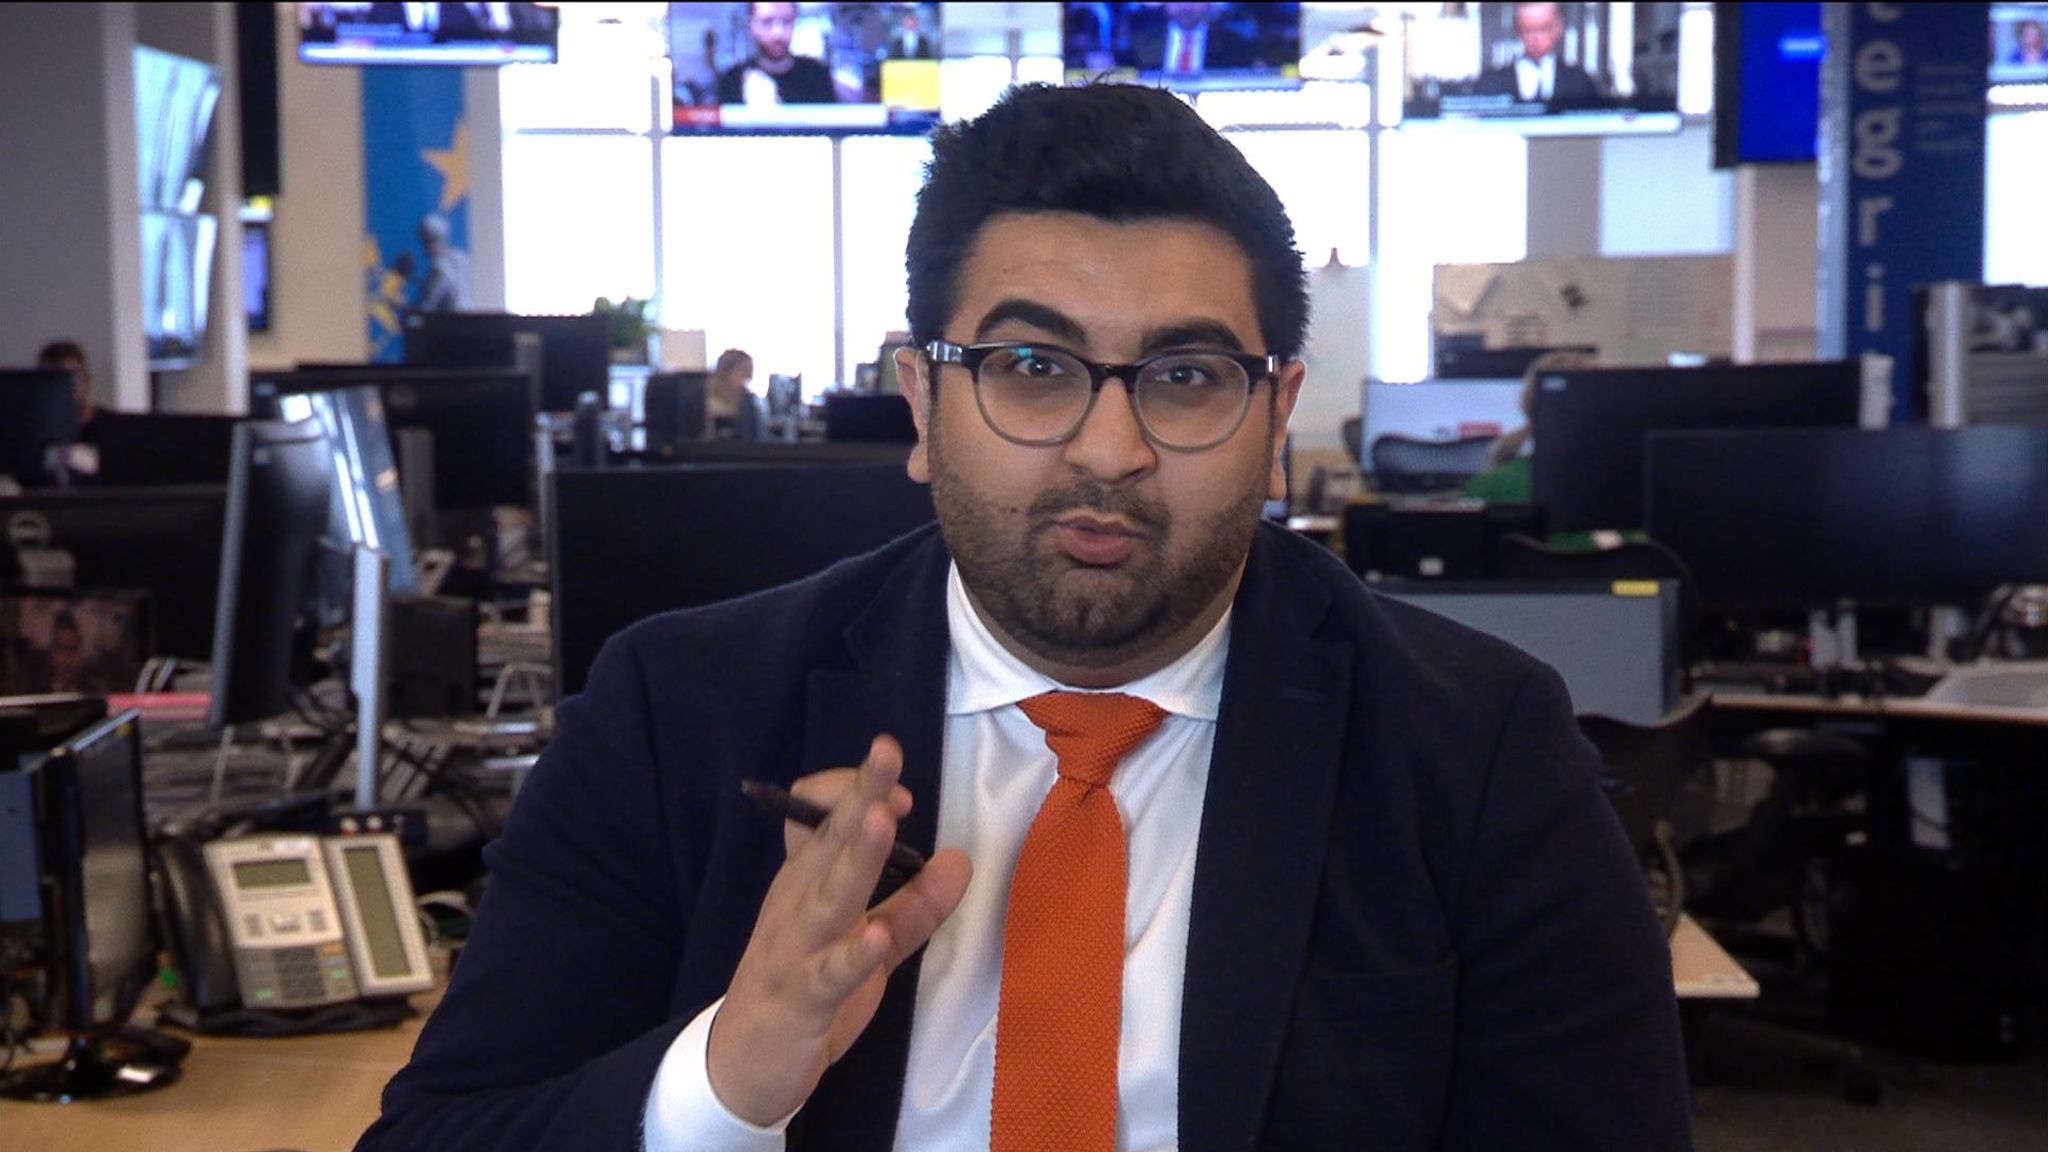 Interview: Sky News correspondent and author Inzamam Rashid